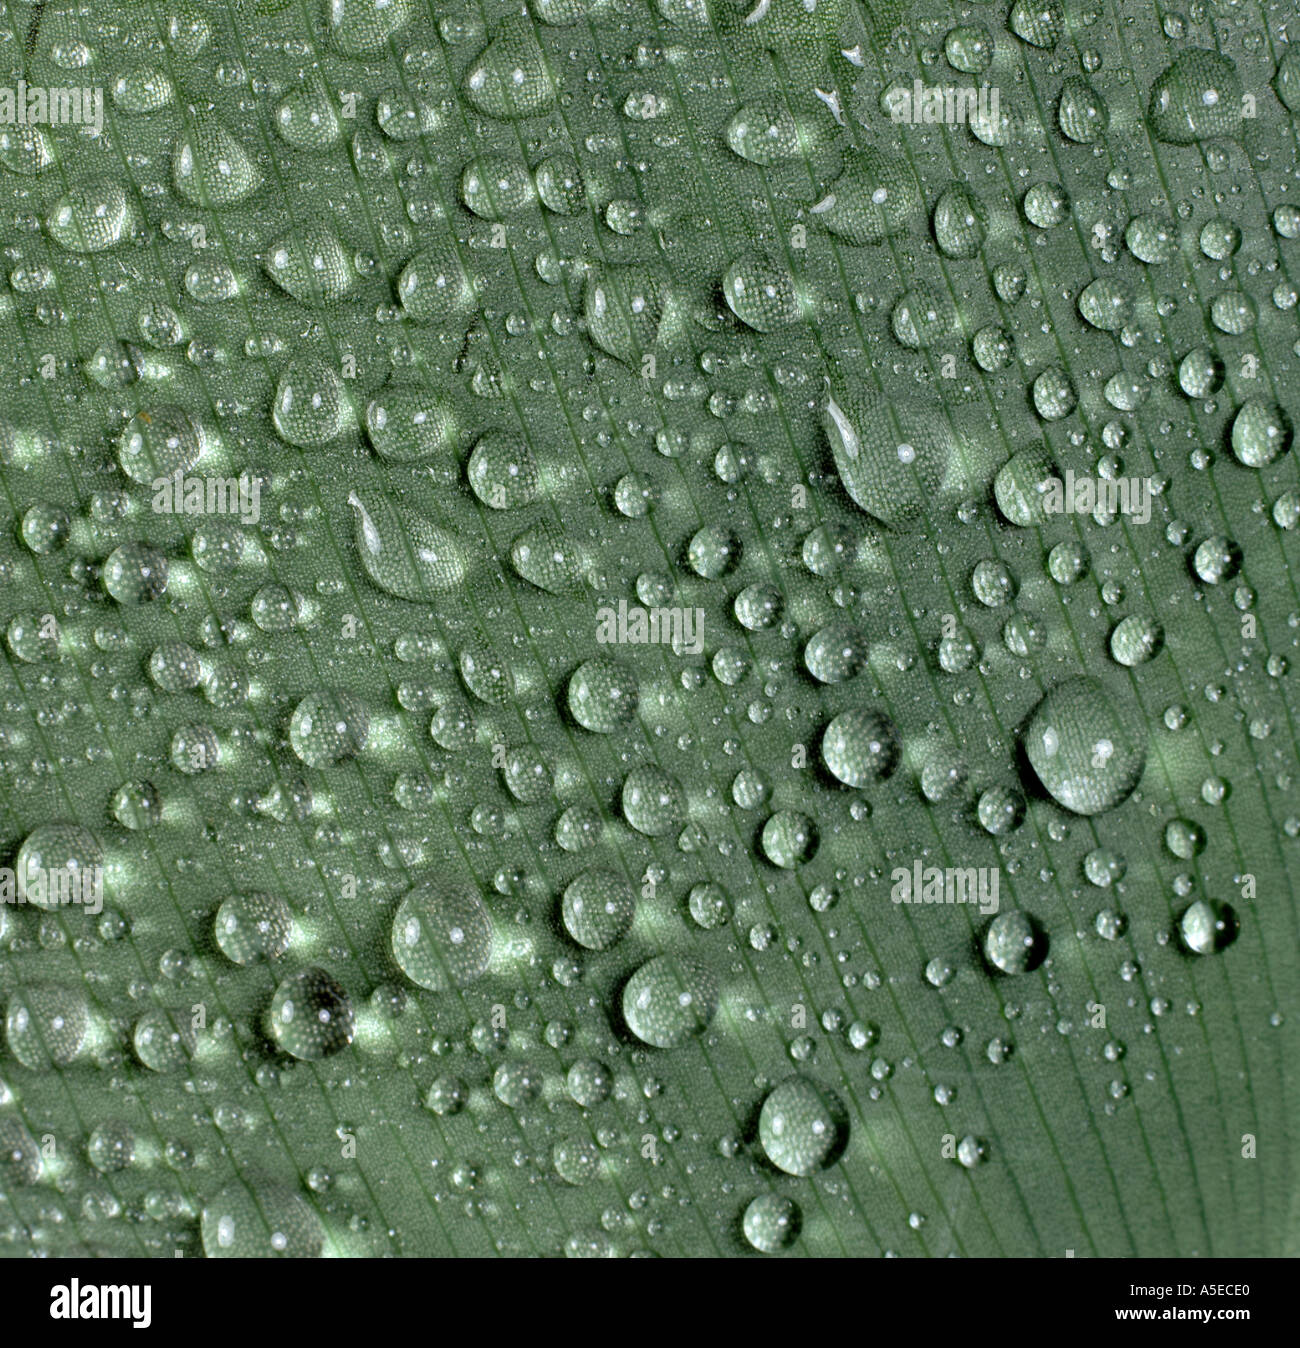 Las gotas de lluvia o agua sobre una hoja de lirio Canna Foto de stock